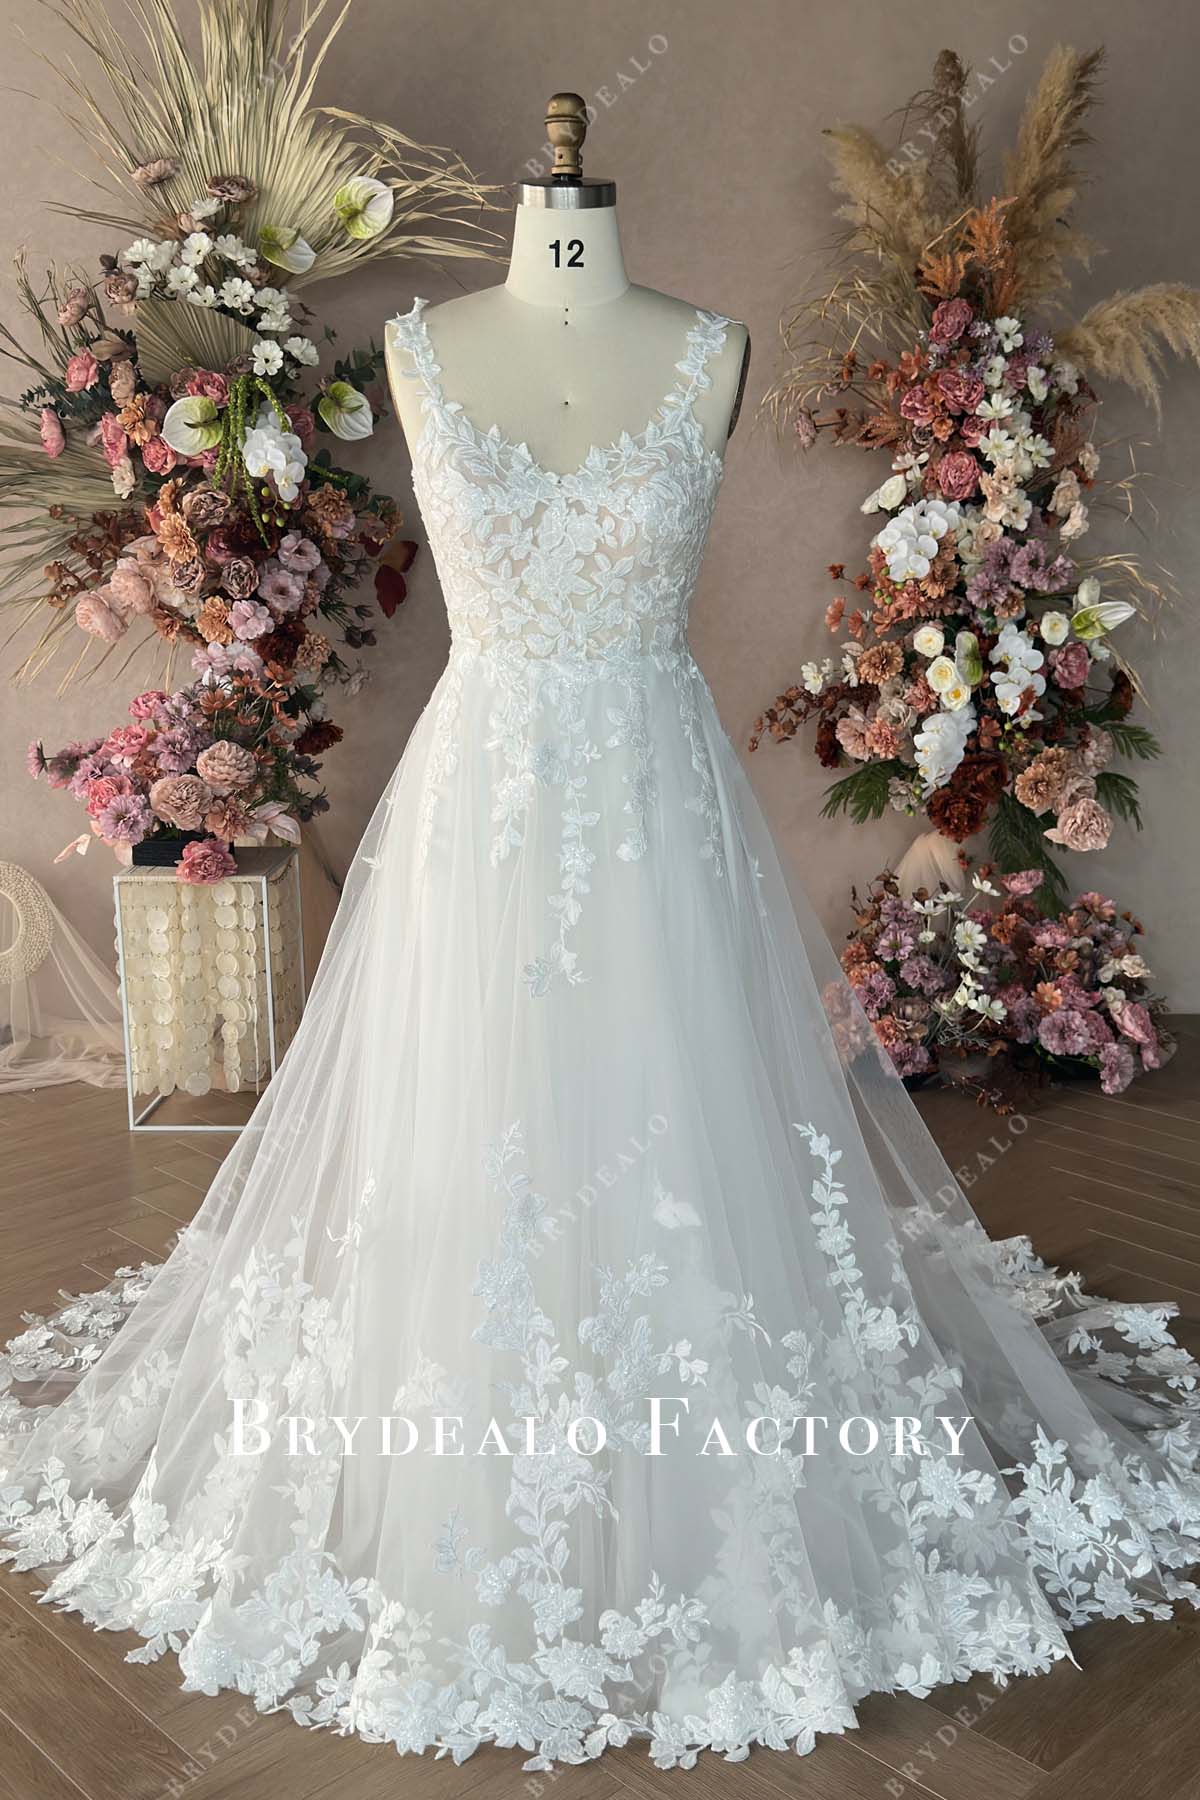 tailored white lace wedding dress